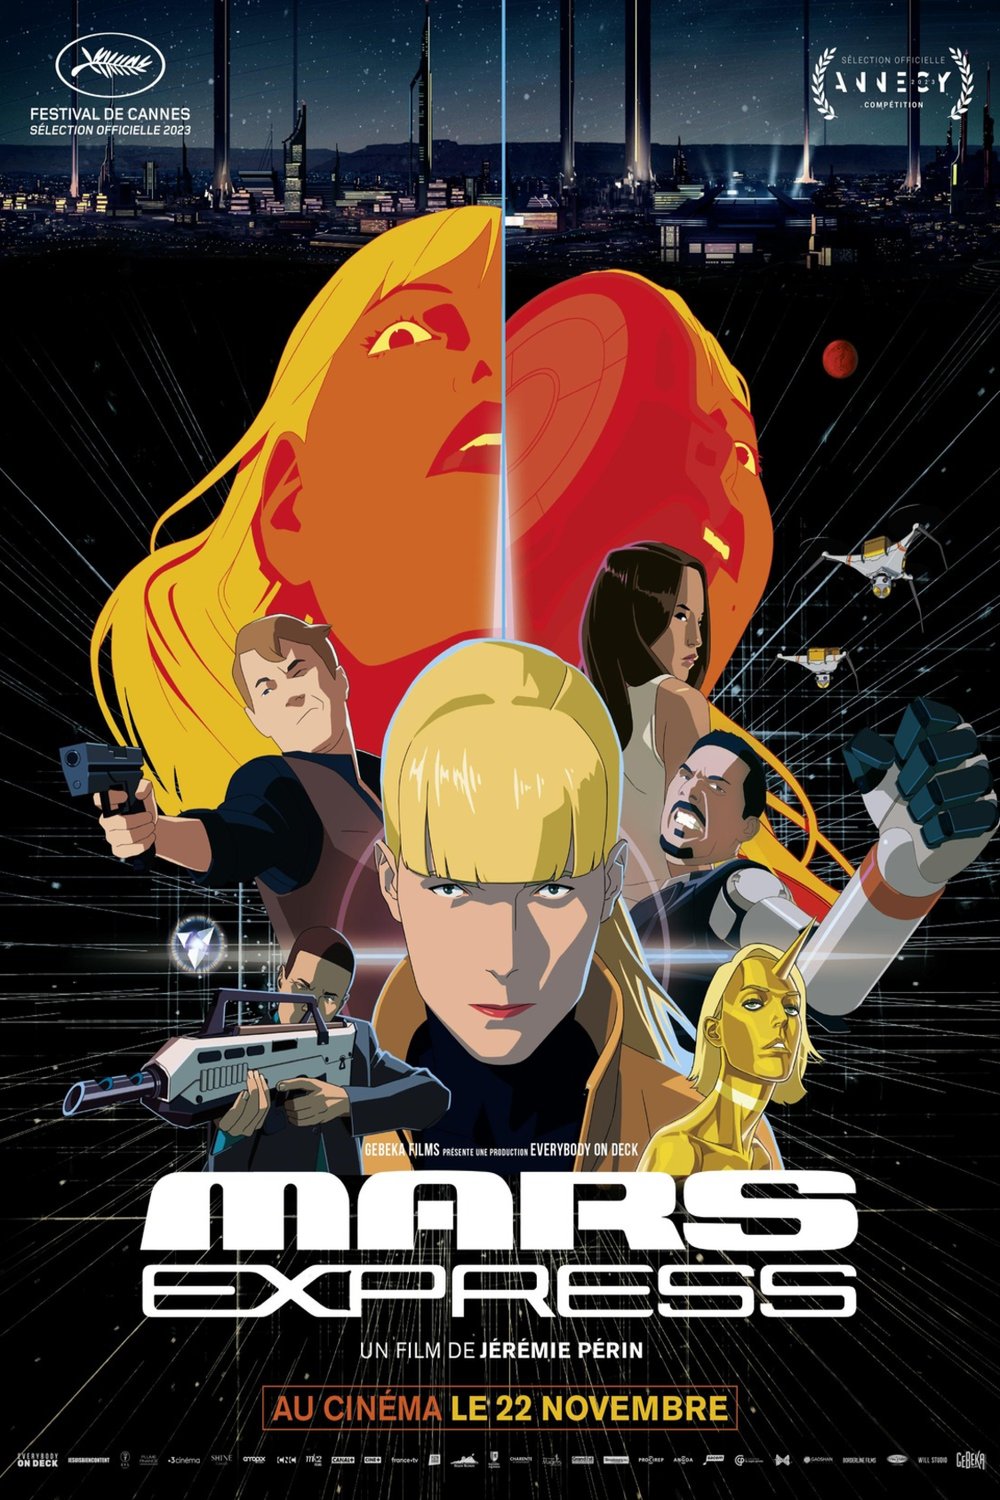 L'affiche du film Express zum Mars